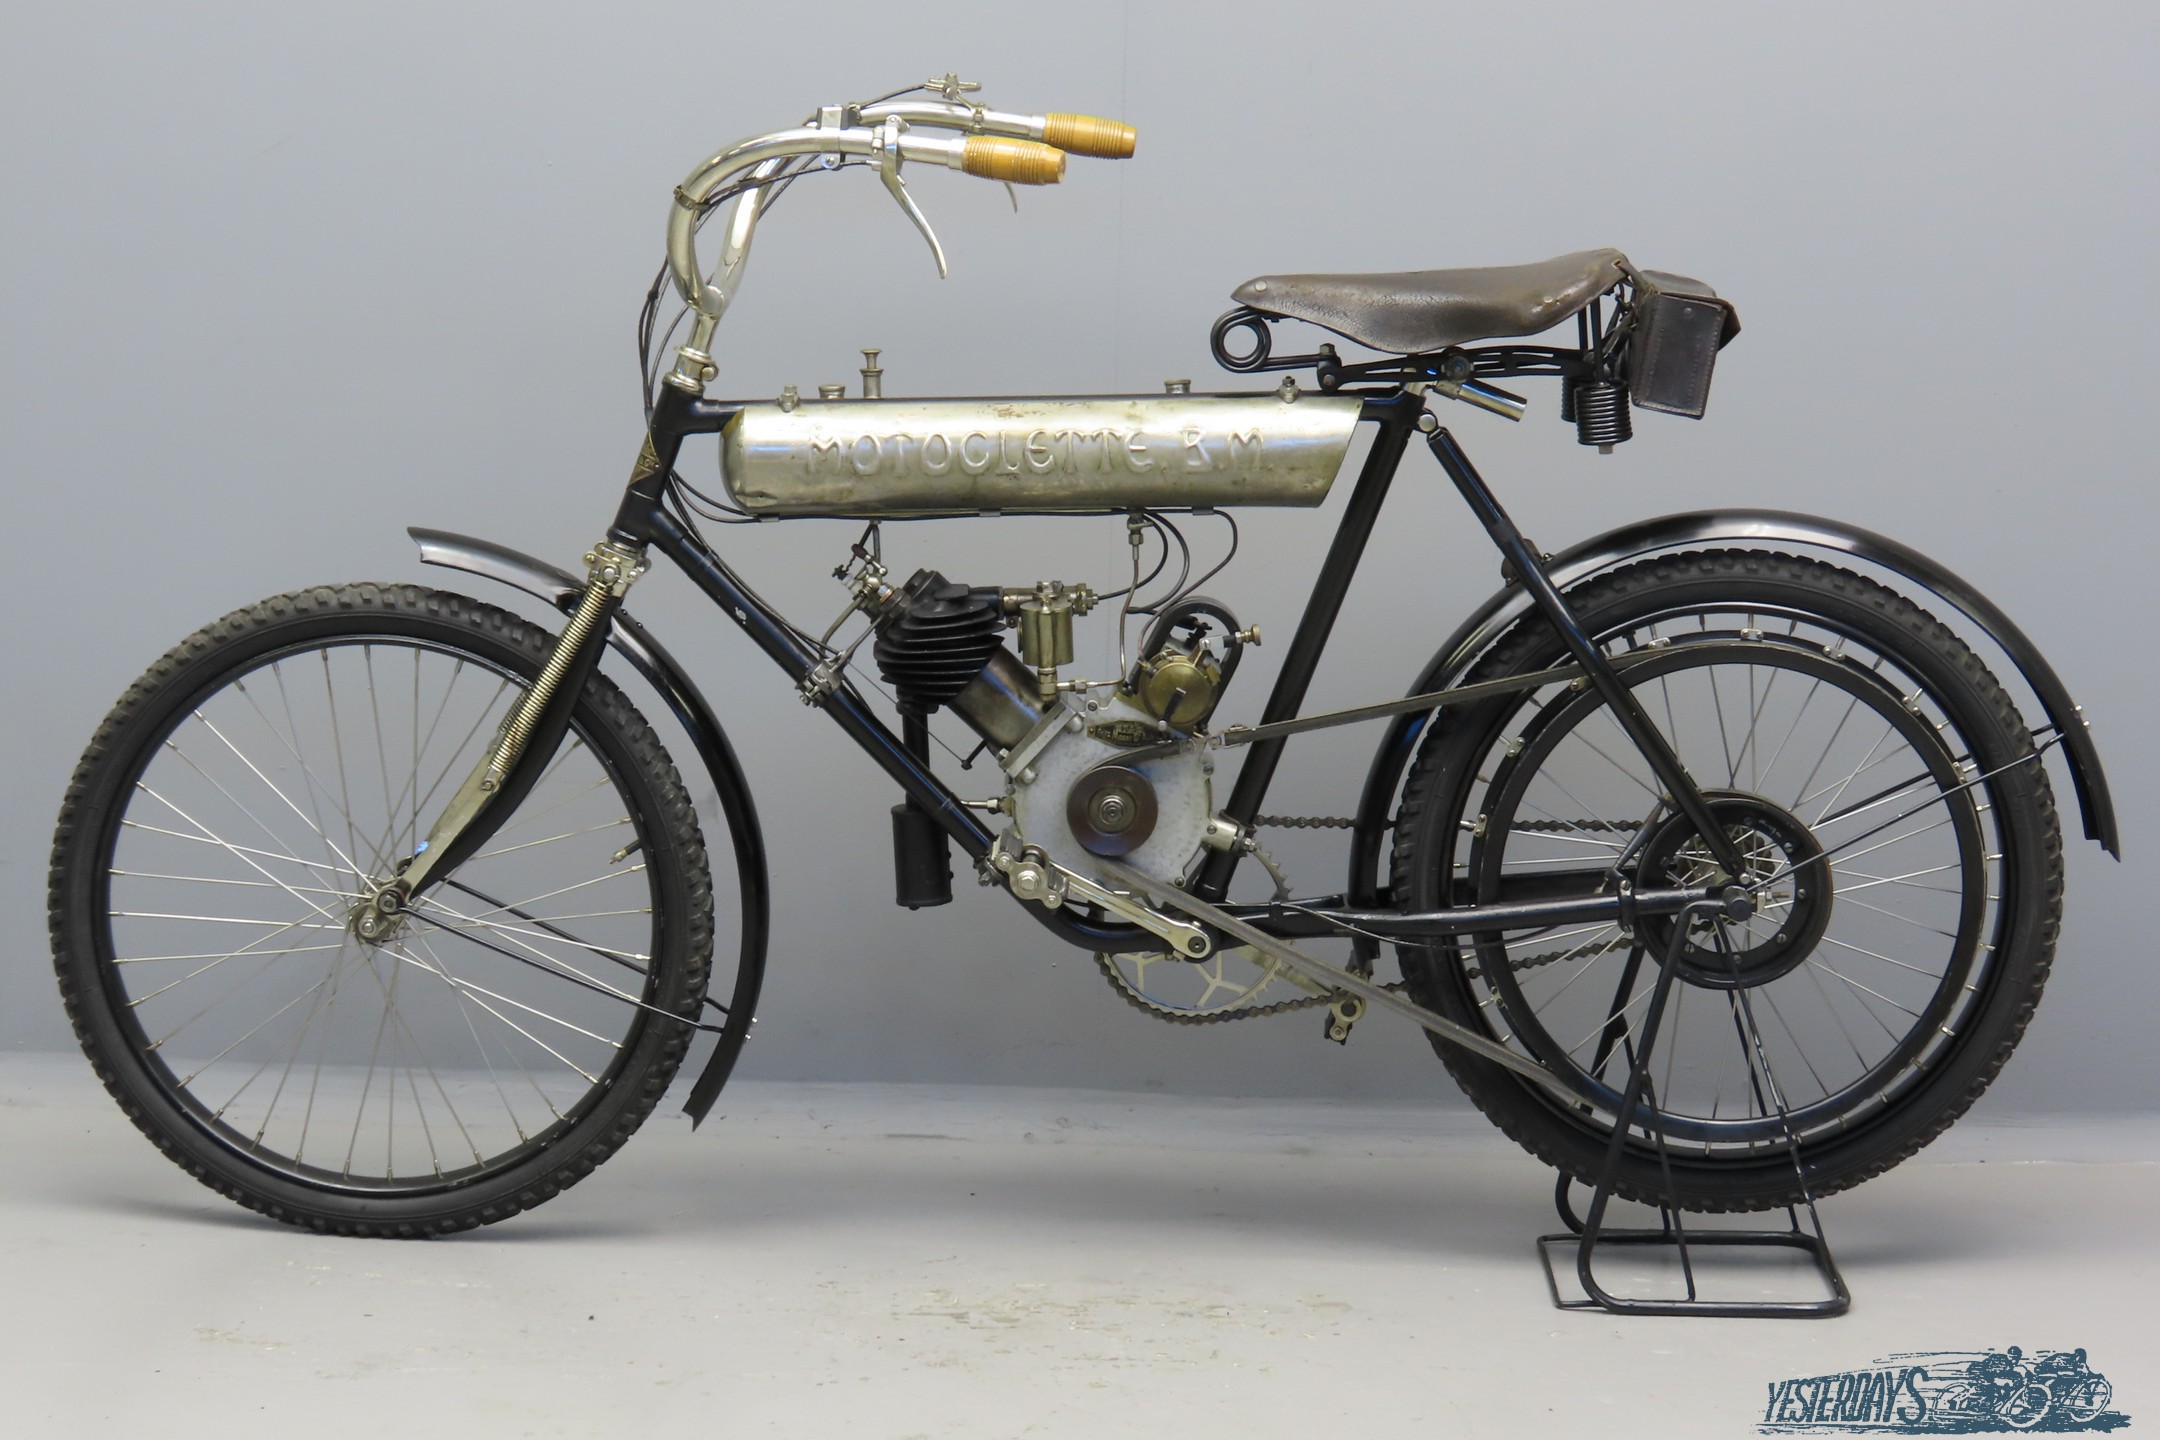 Motocyclette-1912-3011-17